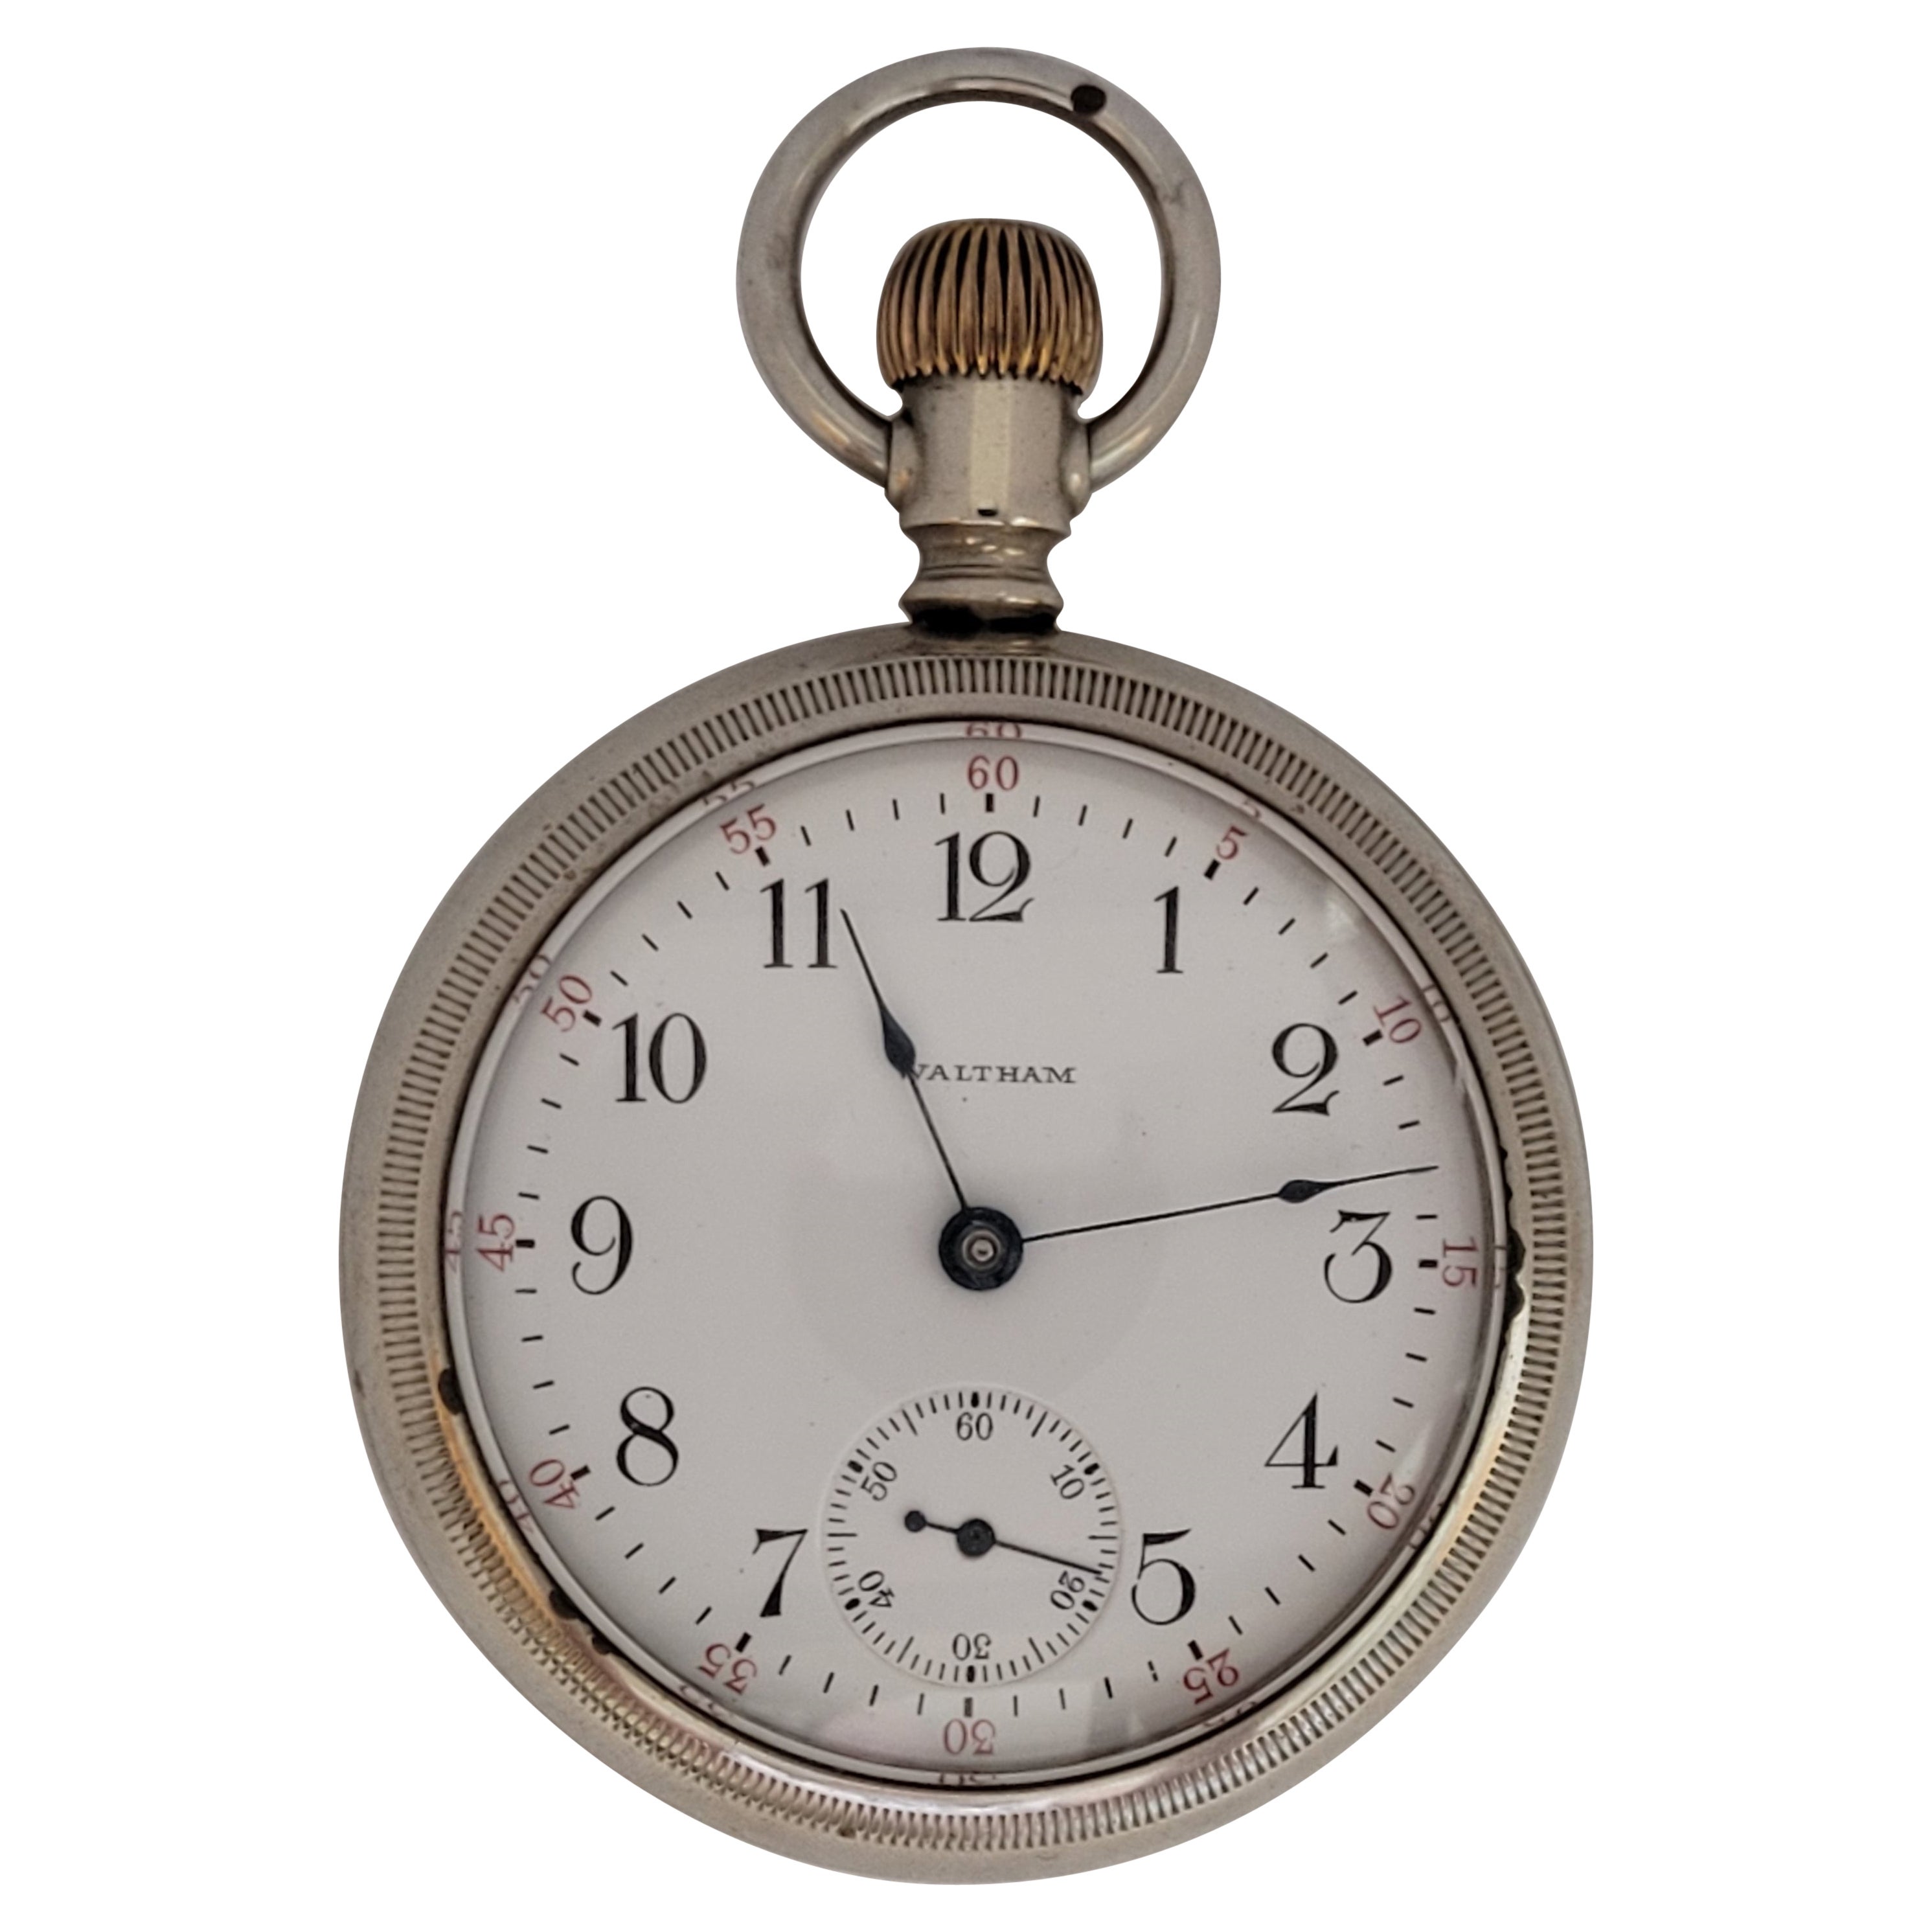 Waltham Railroad Pocket Watch Year 1905 Heavy Ore Silver Working #14391483